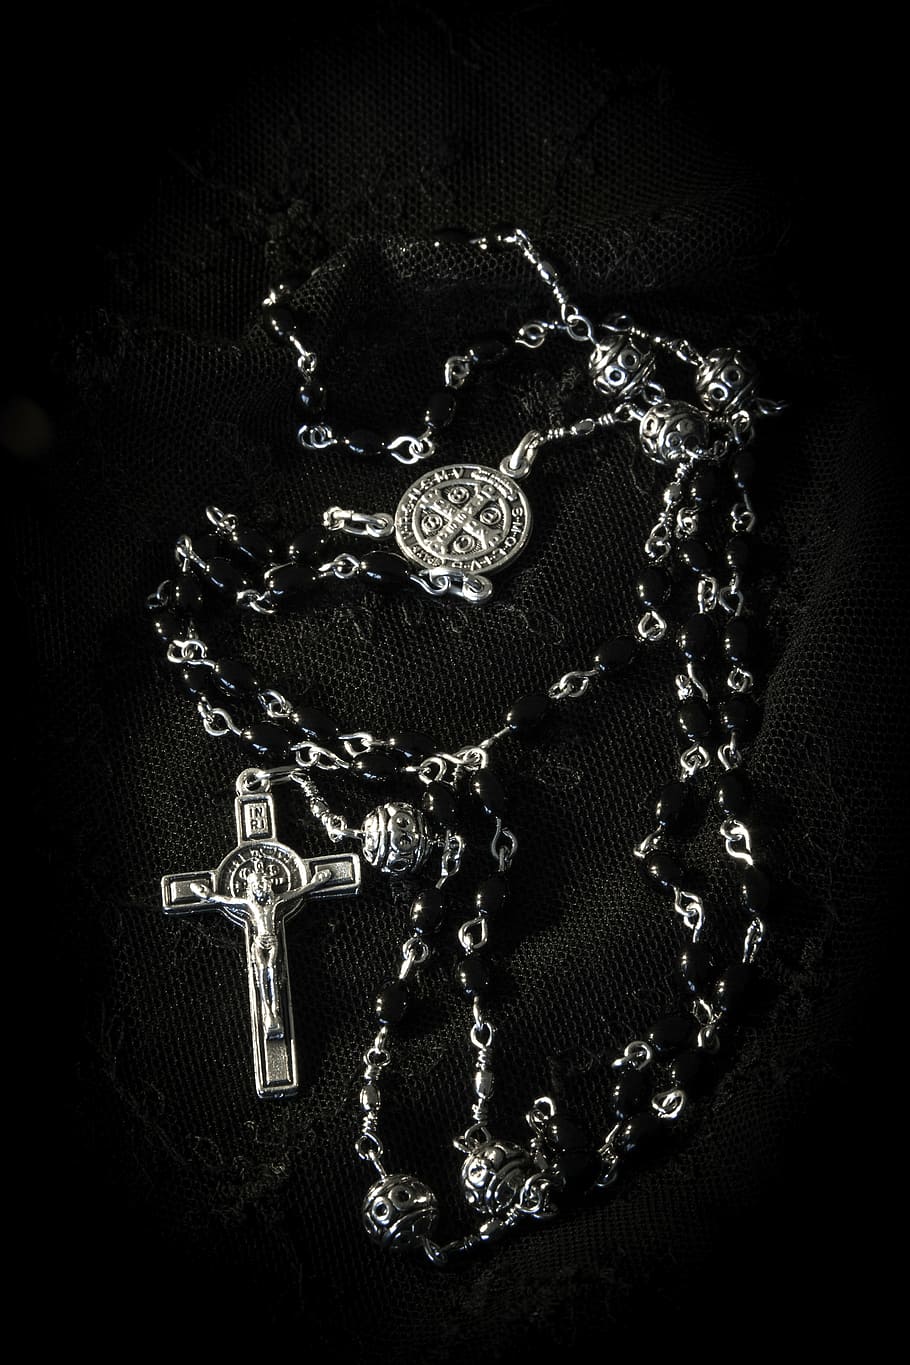 abu-abu, rosario, hitam, permukaan, agama, manik-manik, kekristenan, iman, doa, suci